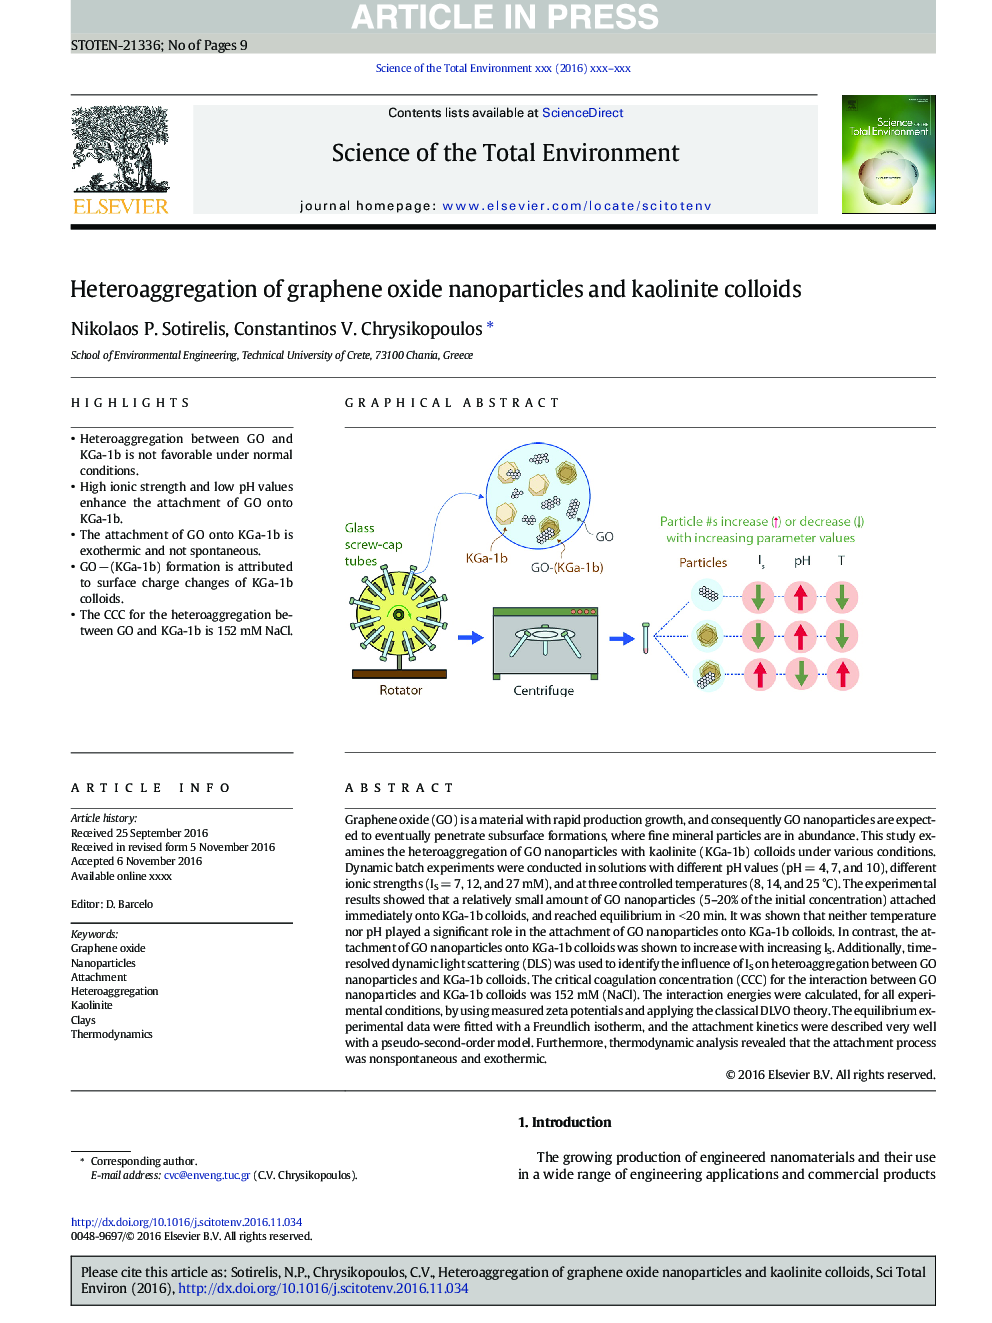 Heteroaggregation of graphene oxide nanoparticles and kaolinite colloids